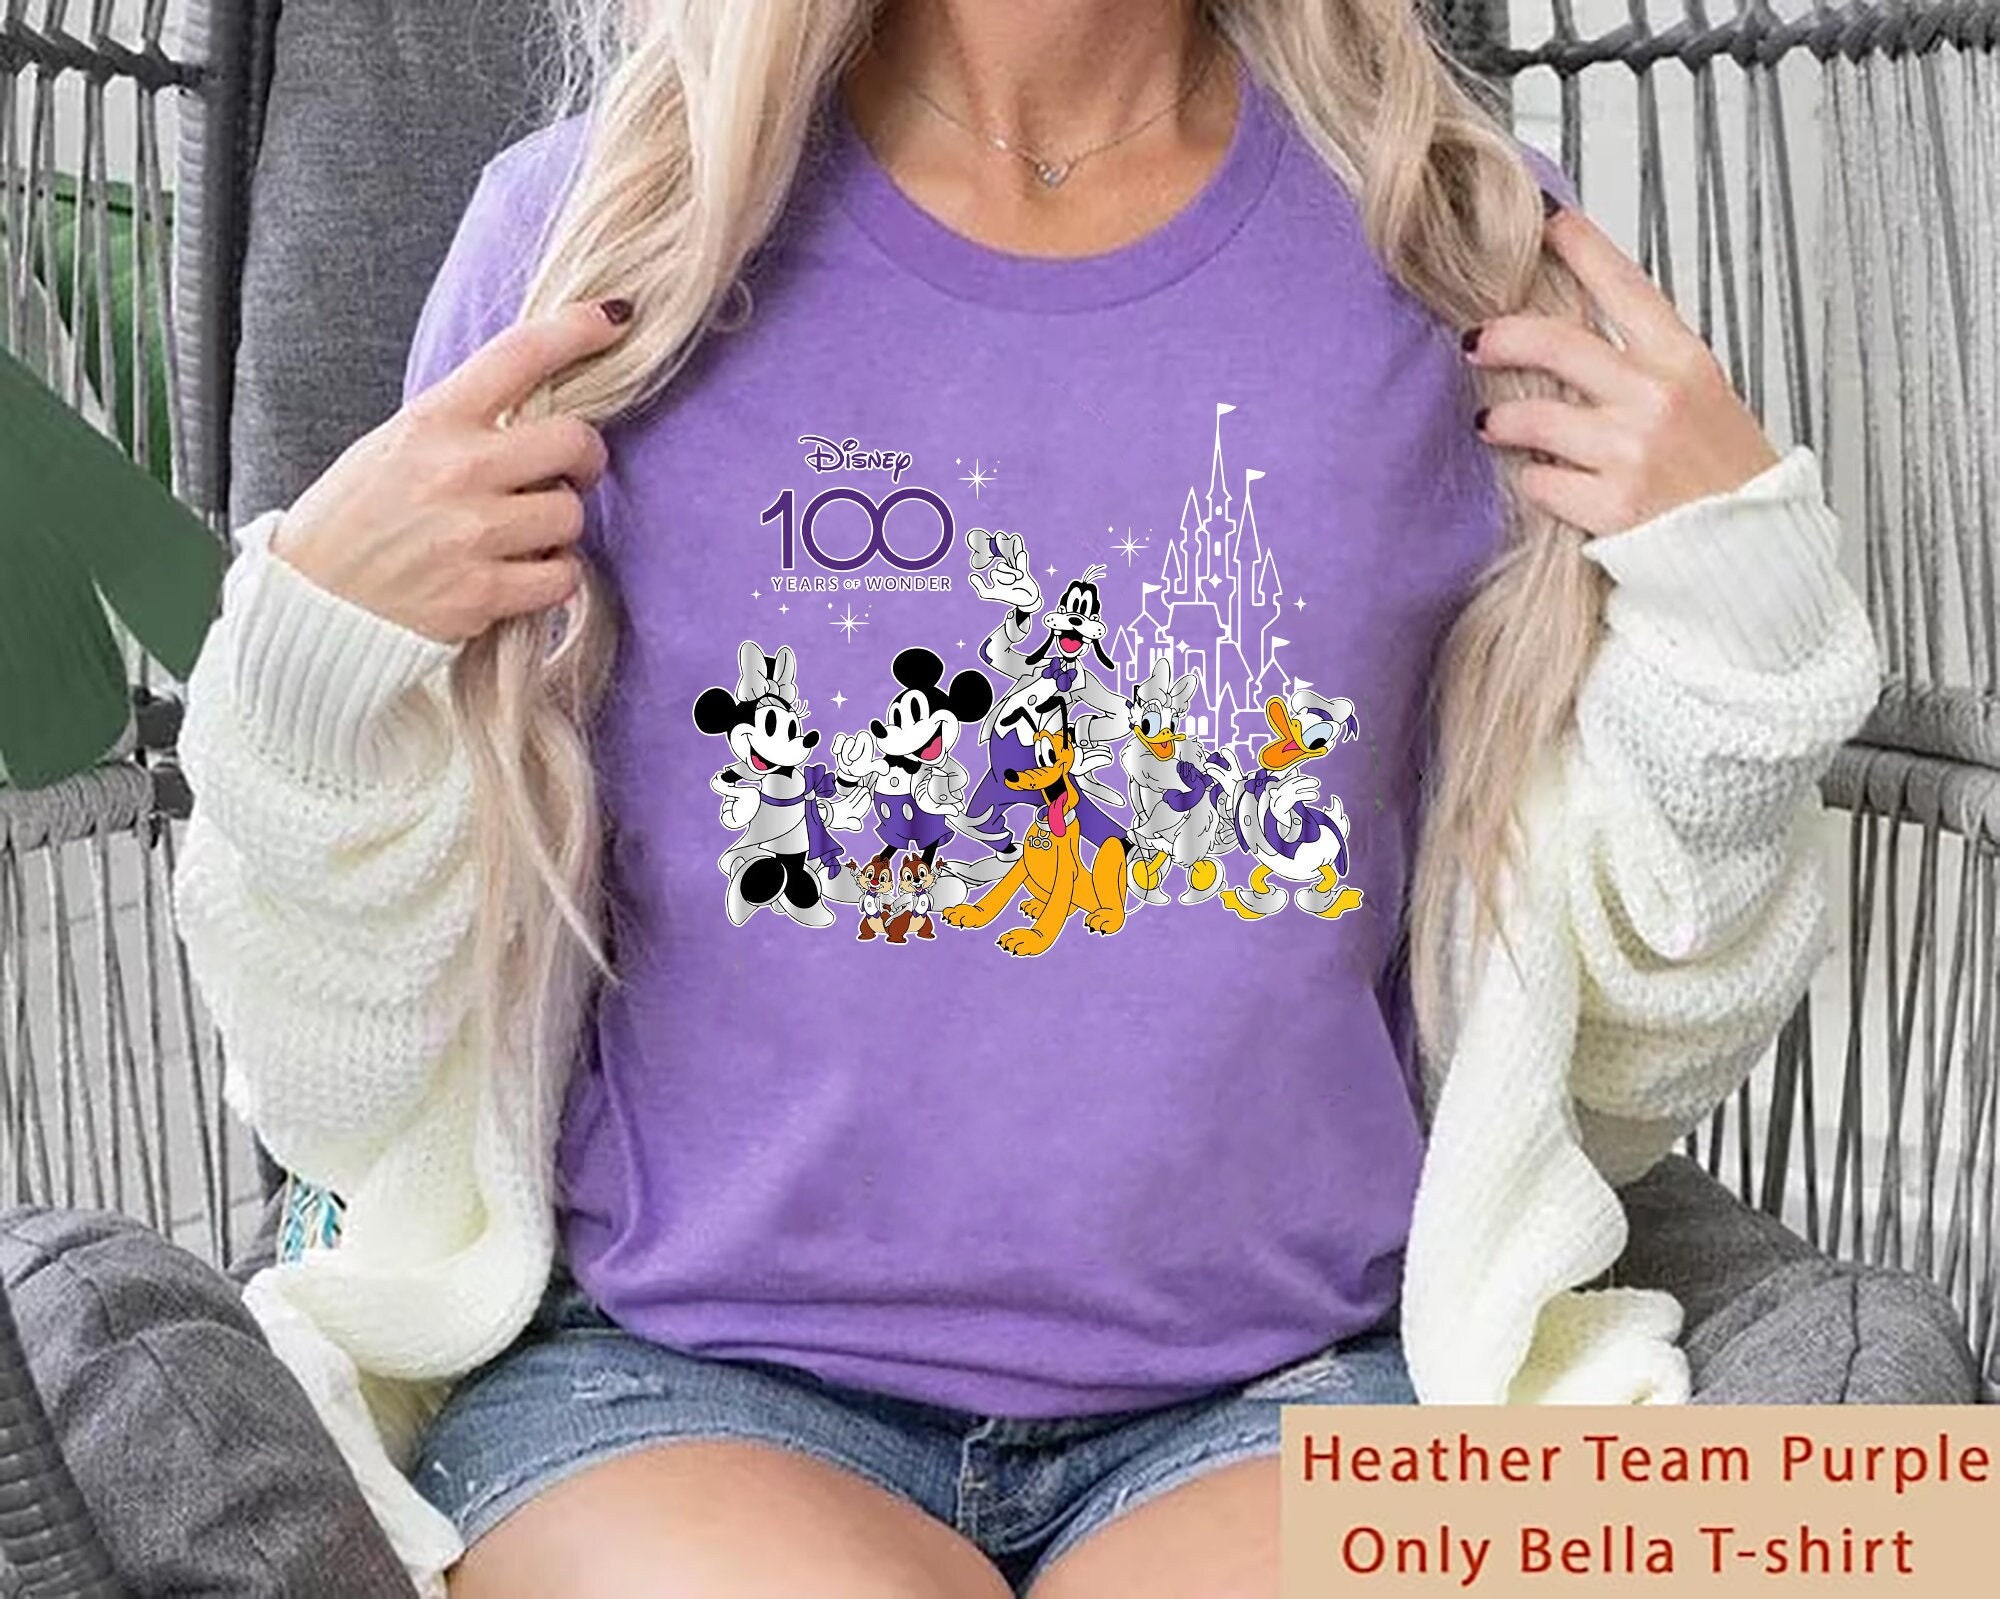 100 Years Of Wonder Shirt, Disney Anniversary Shirt, Disney 100th Shirt, Magic Kingdom Shirt